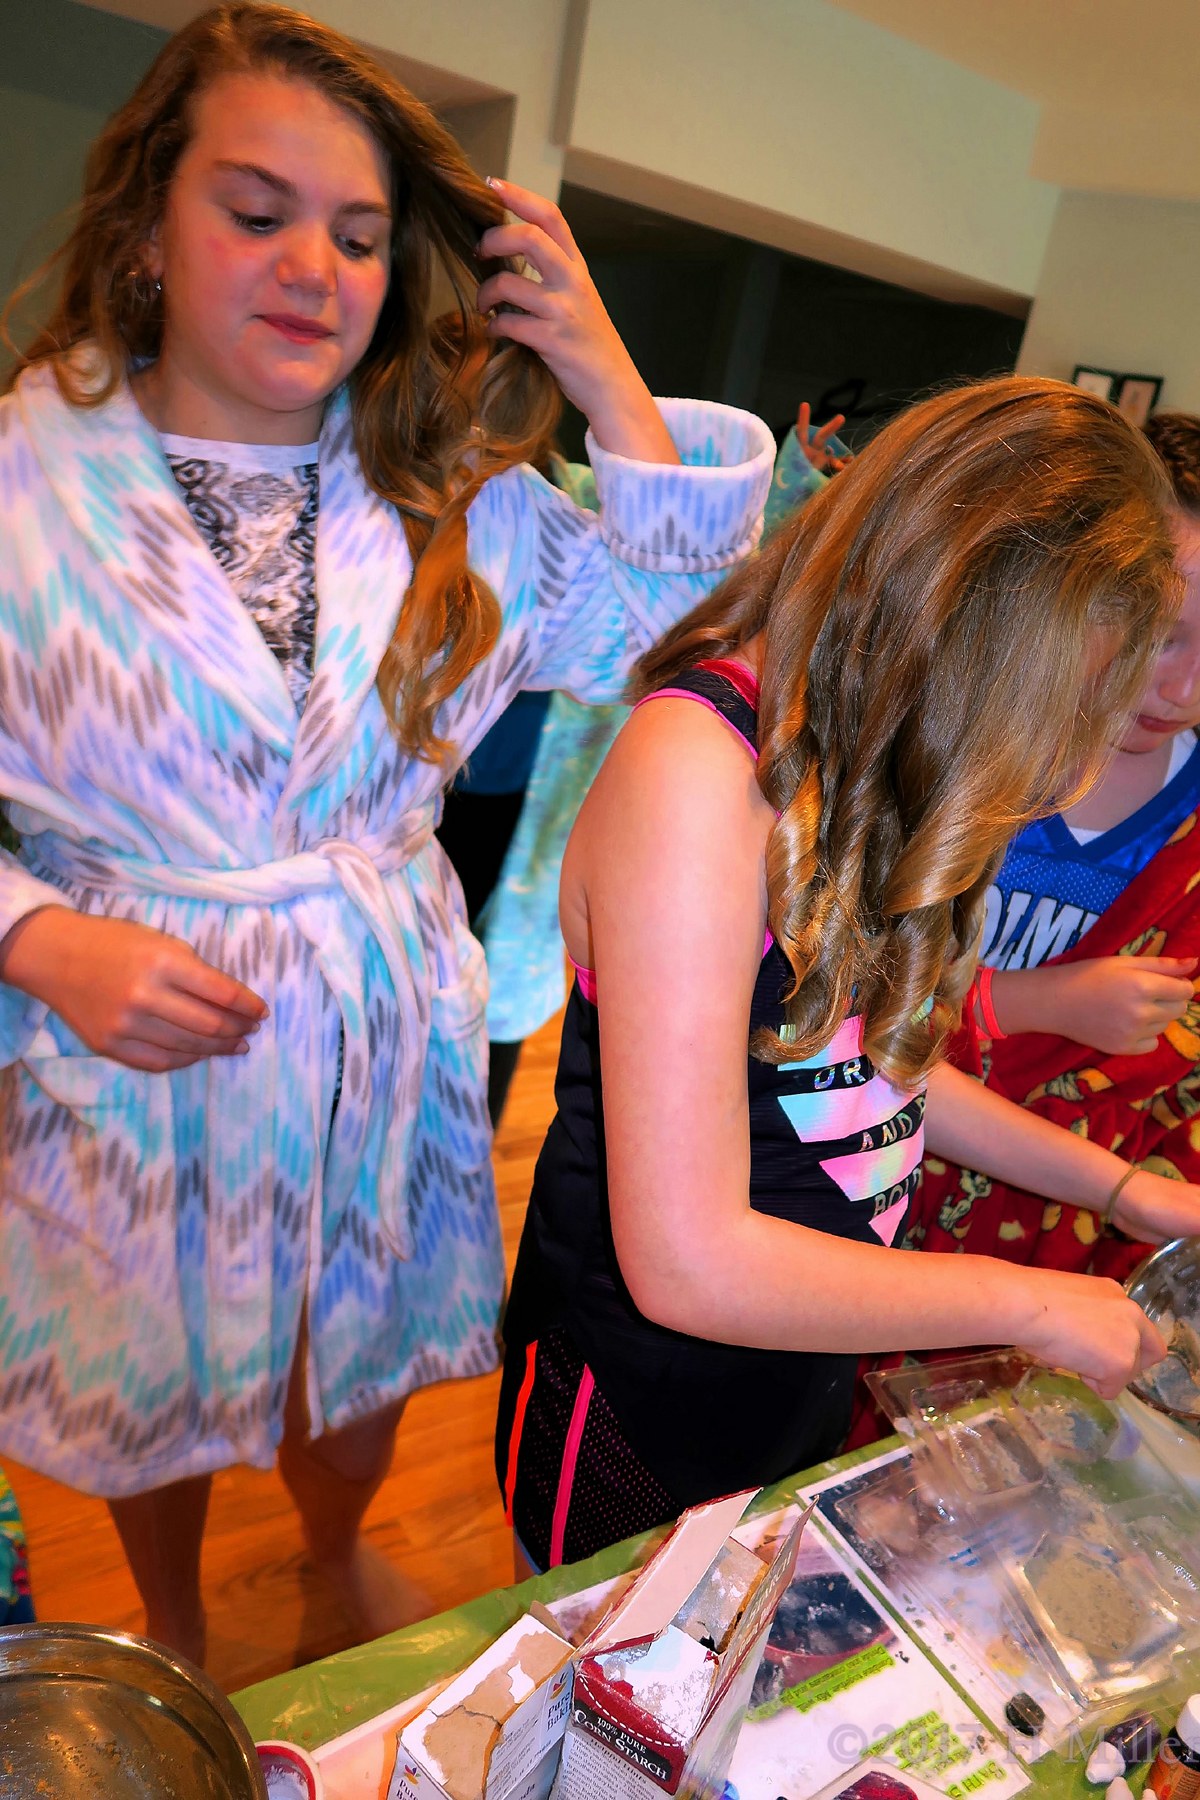 The Girls Preparing Ingredients For More Kids Craft Activities! 